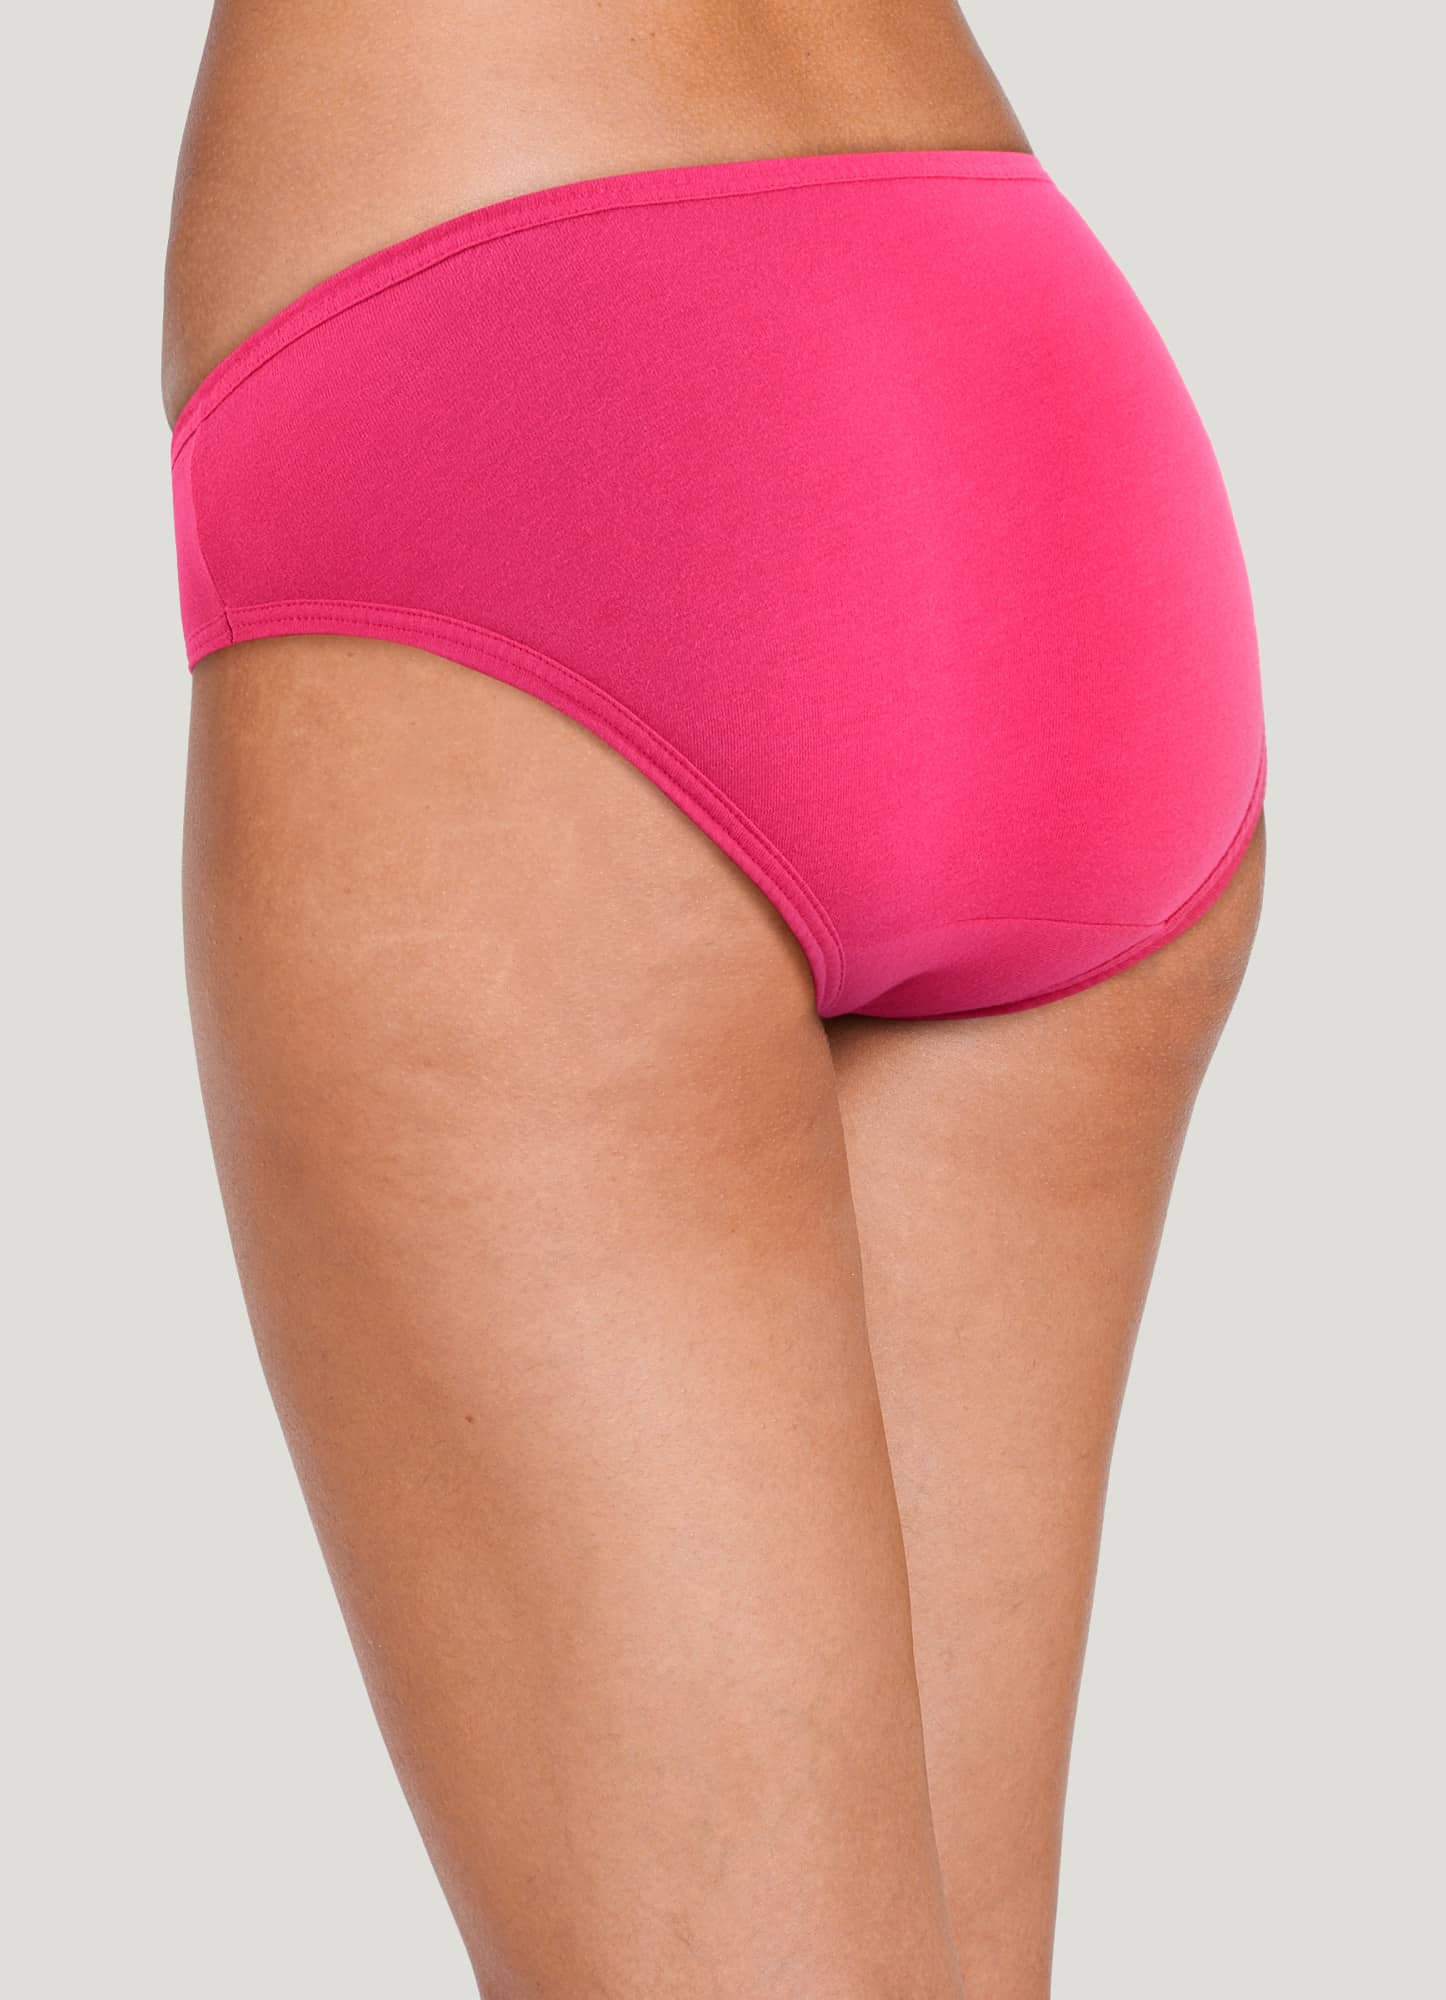 Jockey Ladies Underwear Great Value Cotton Bikini Panties - 6 Pack, Shop  Today. Get it Tomorrow!